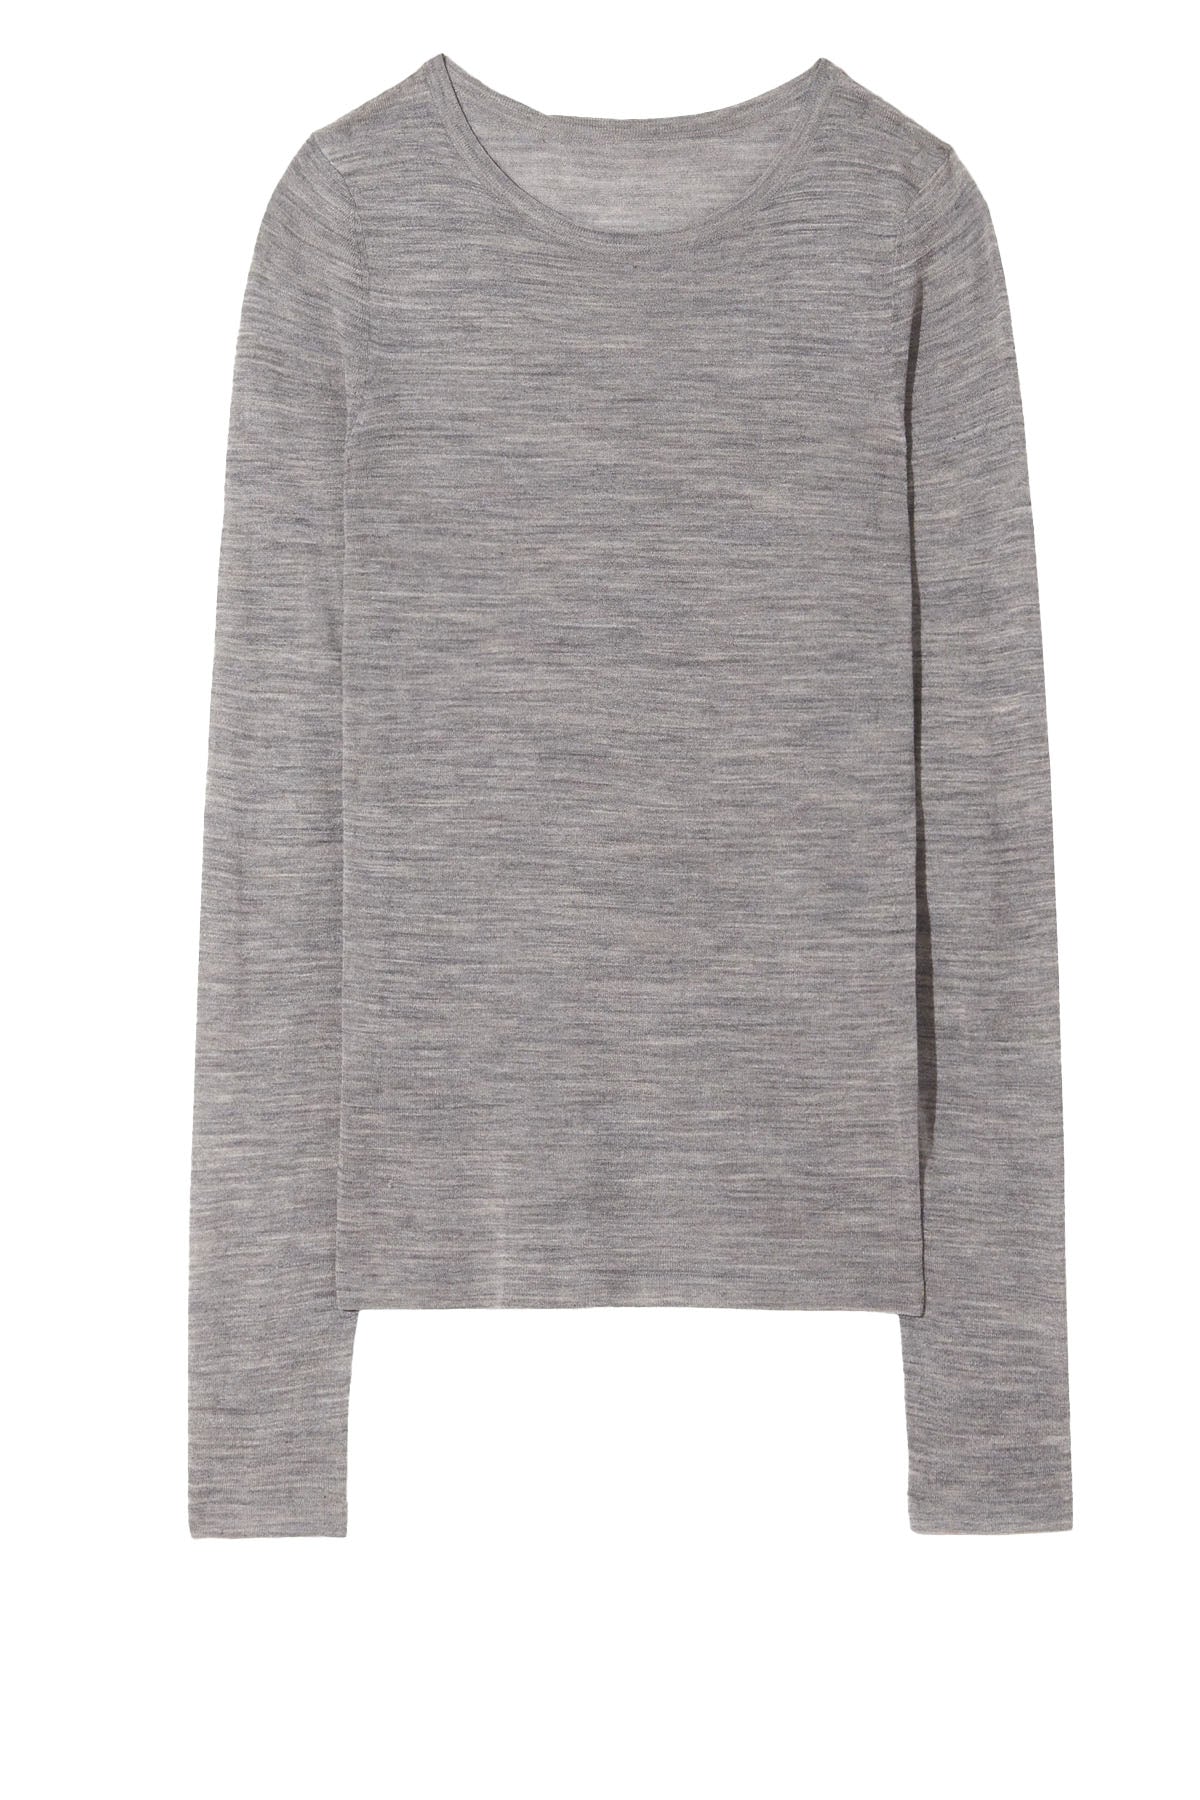 nili lotan candace sweater - dark grey melange – Eloise